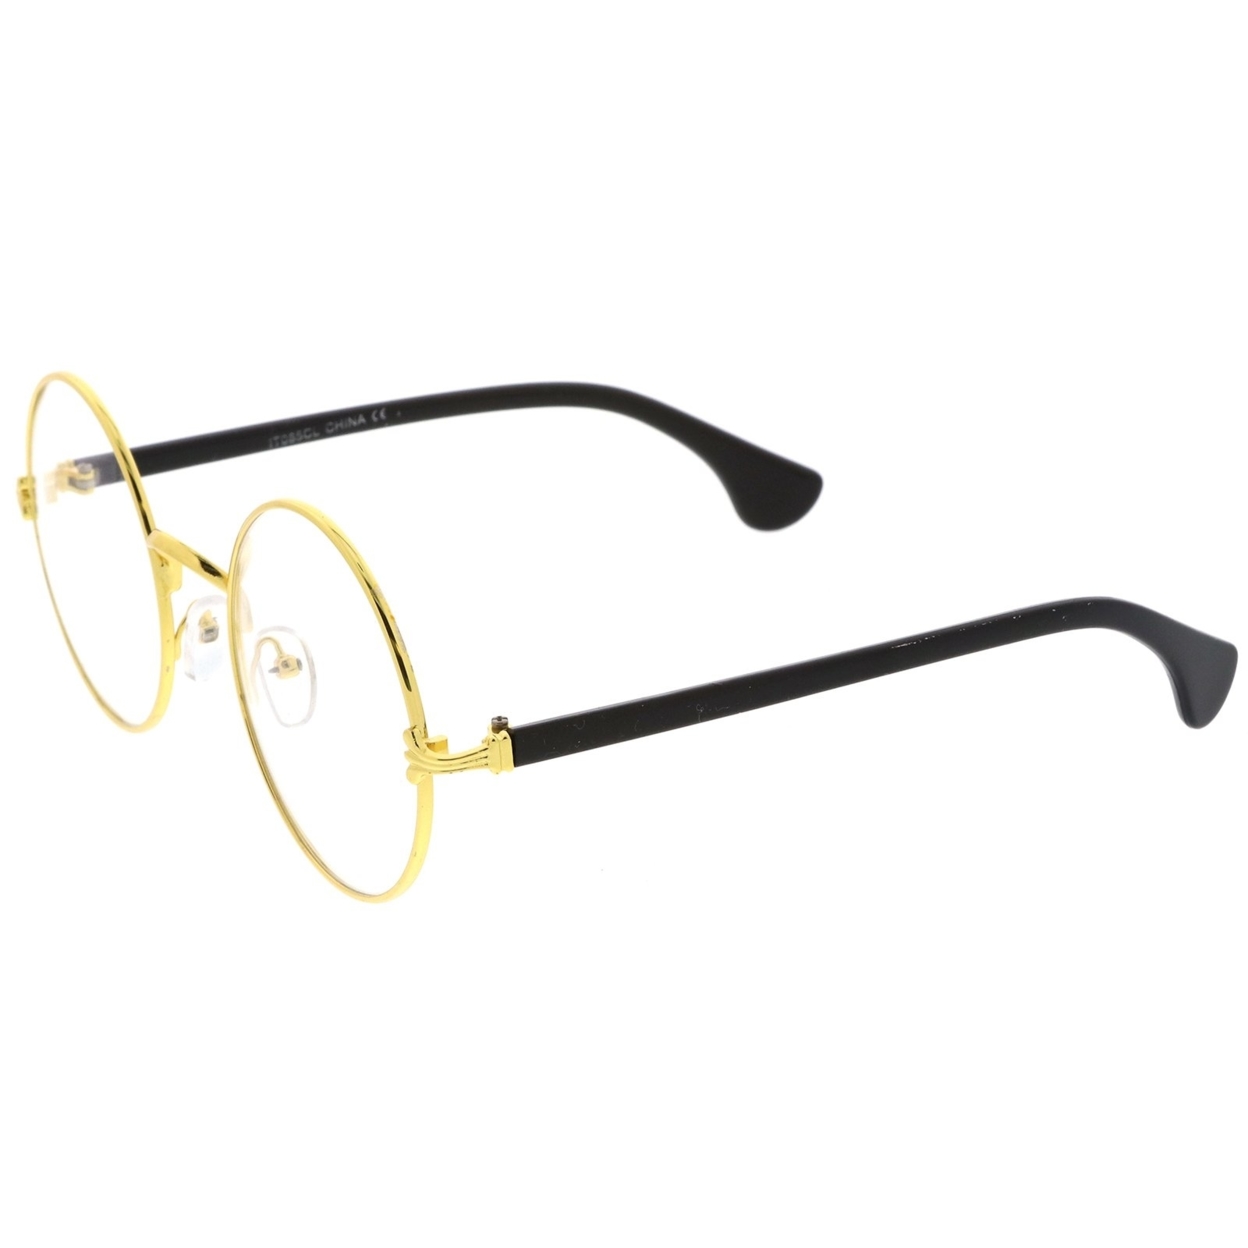 Classic Slim Metal Frame Clear Lens Round Eyeglasses 53mm - Gold-Black / Clear